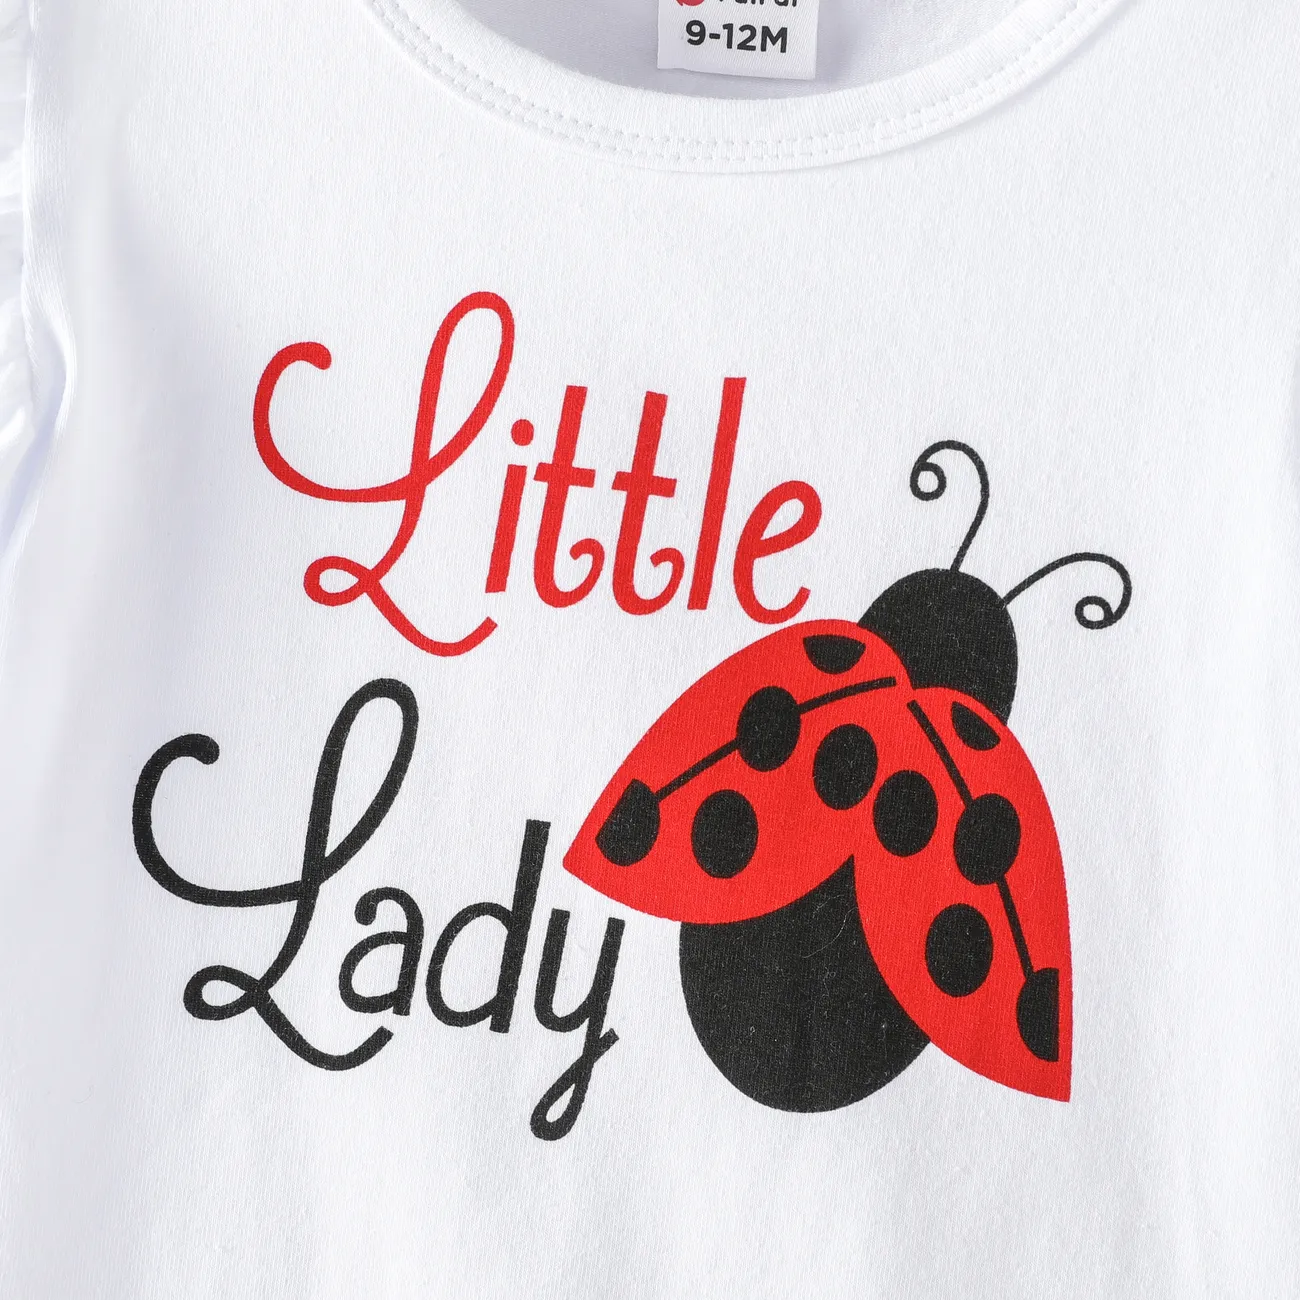 3pcs Baby Girl 95% Cotton Ruffle Sleeve Letter Print Romper and Ladybugs Print Shorts with Headband Set White big image 1